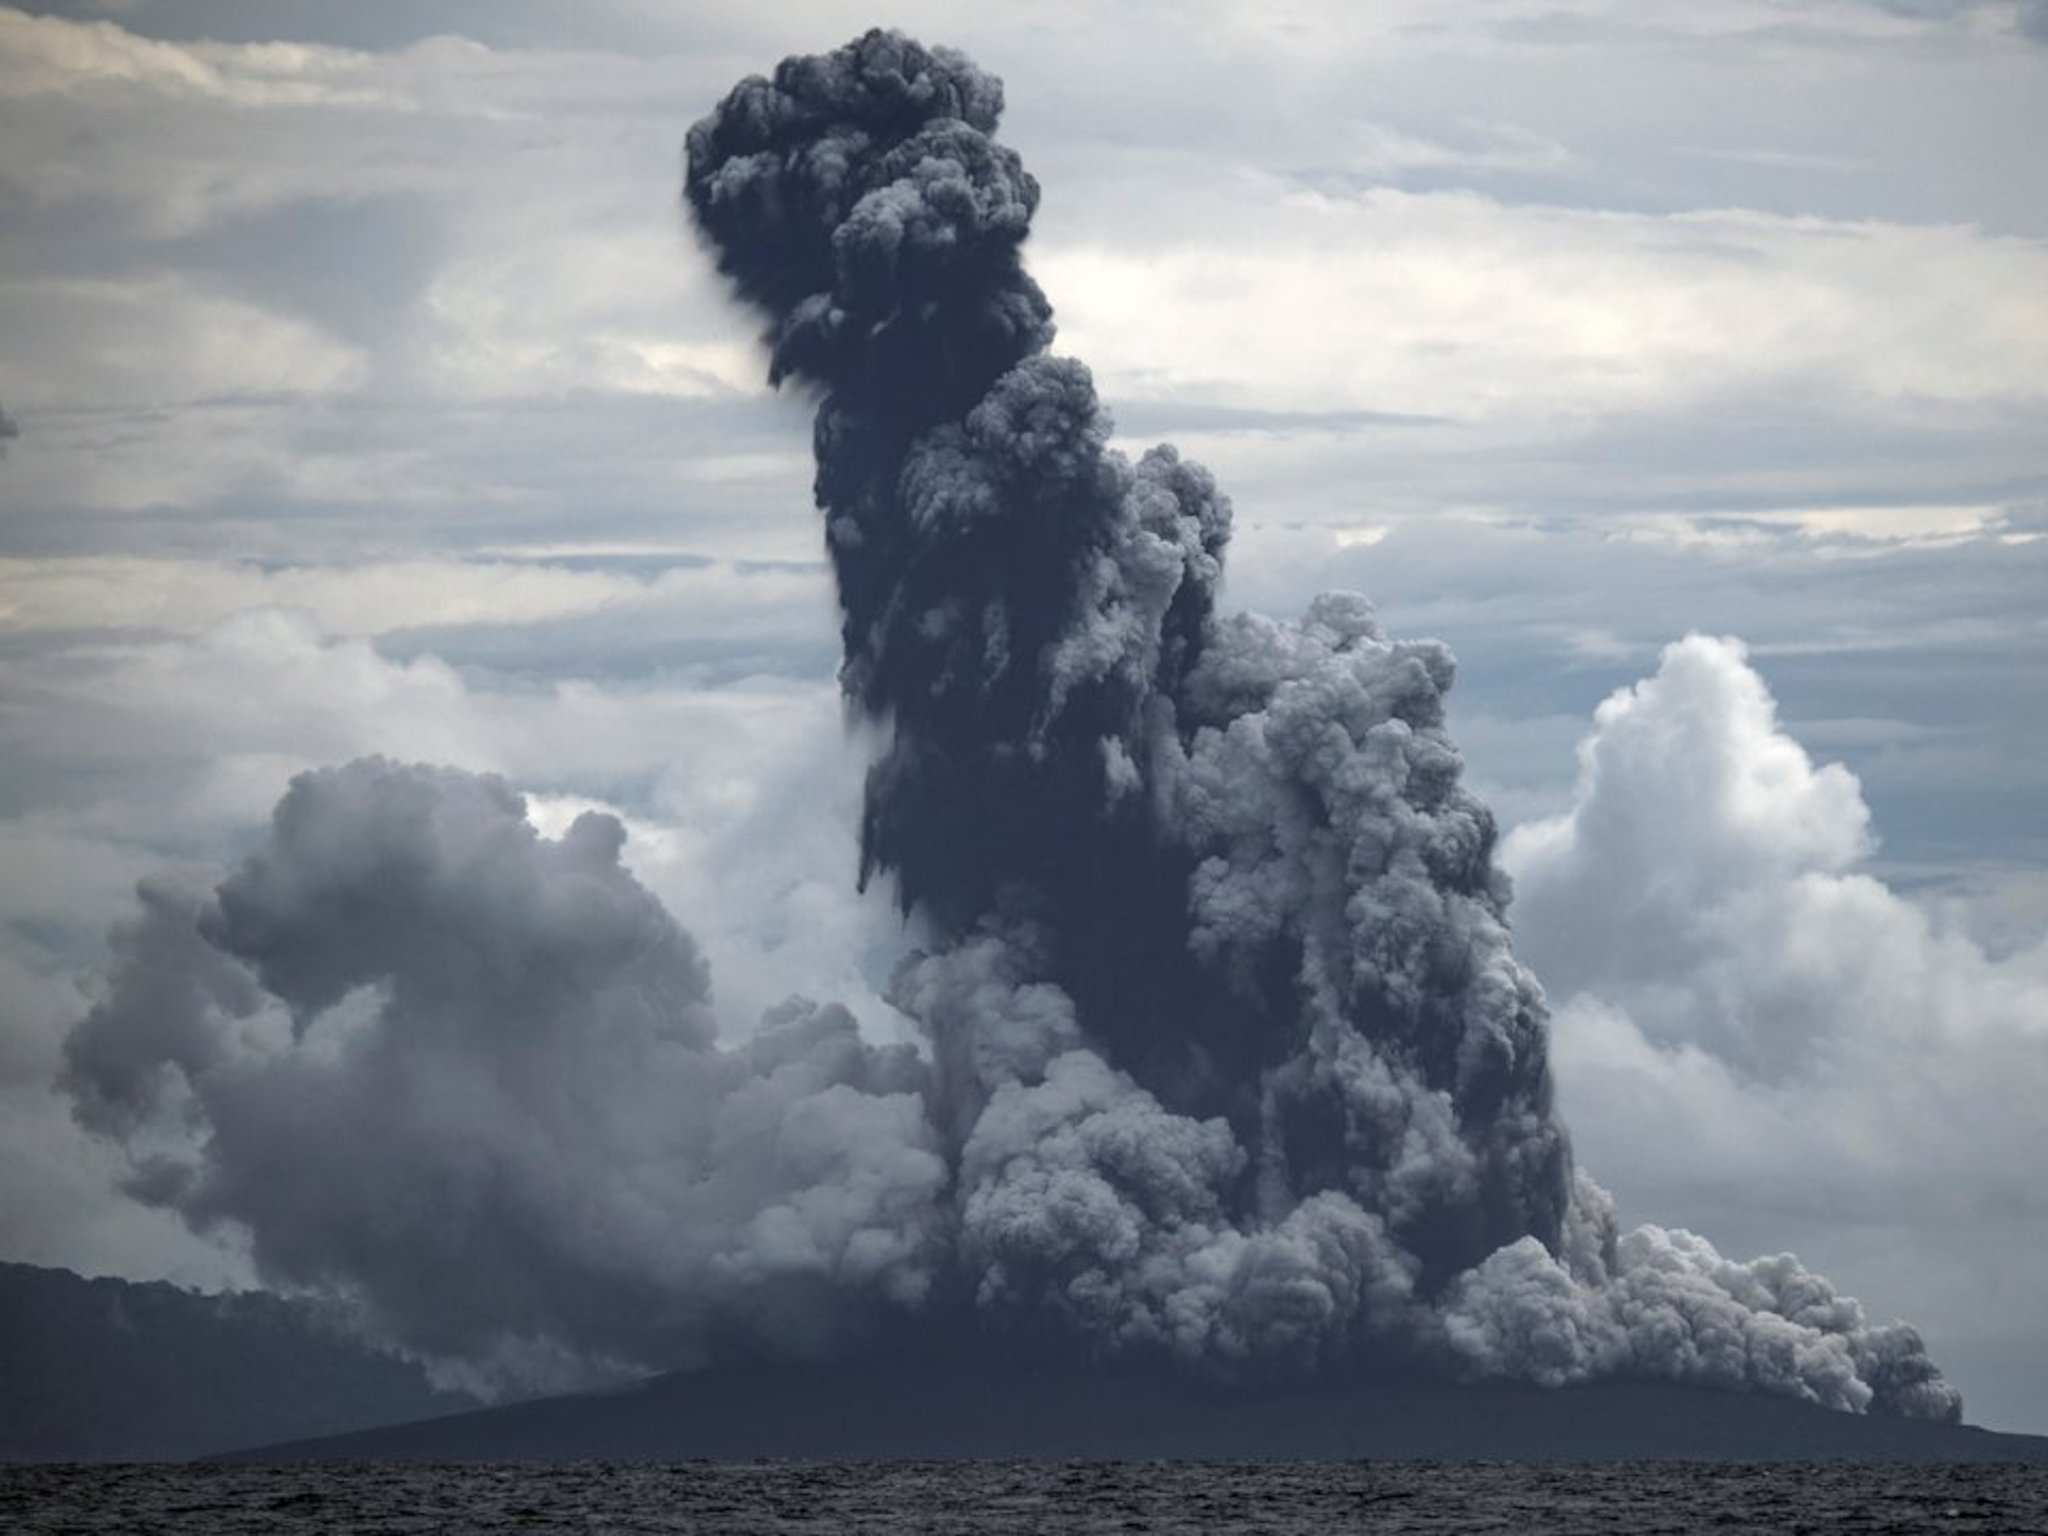 krakatoa.jpg